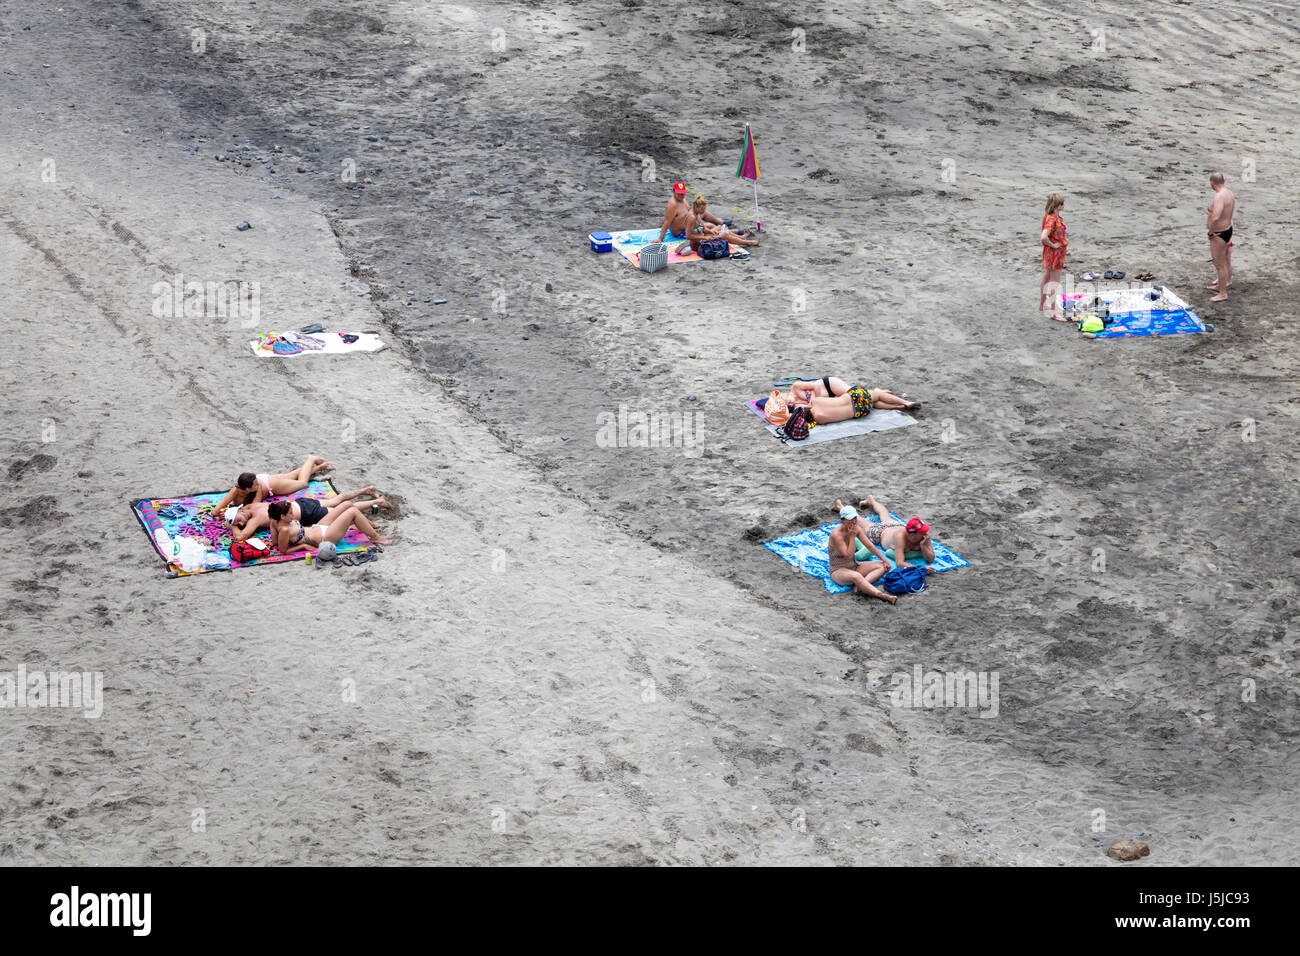 People sunbathing on a volcanic beach in Tenerife, Spain Stock Photo